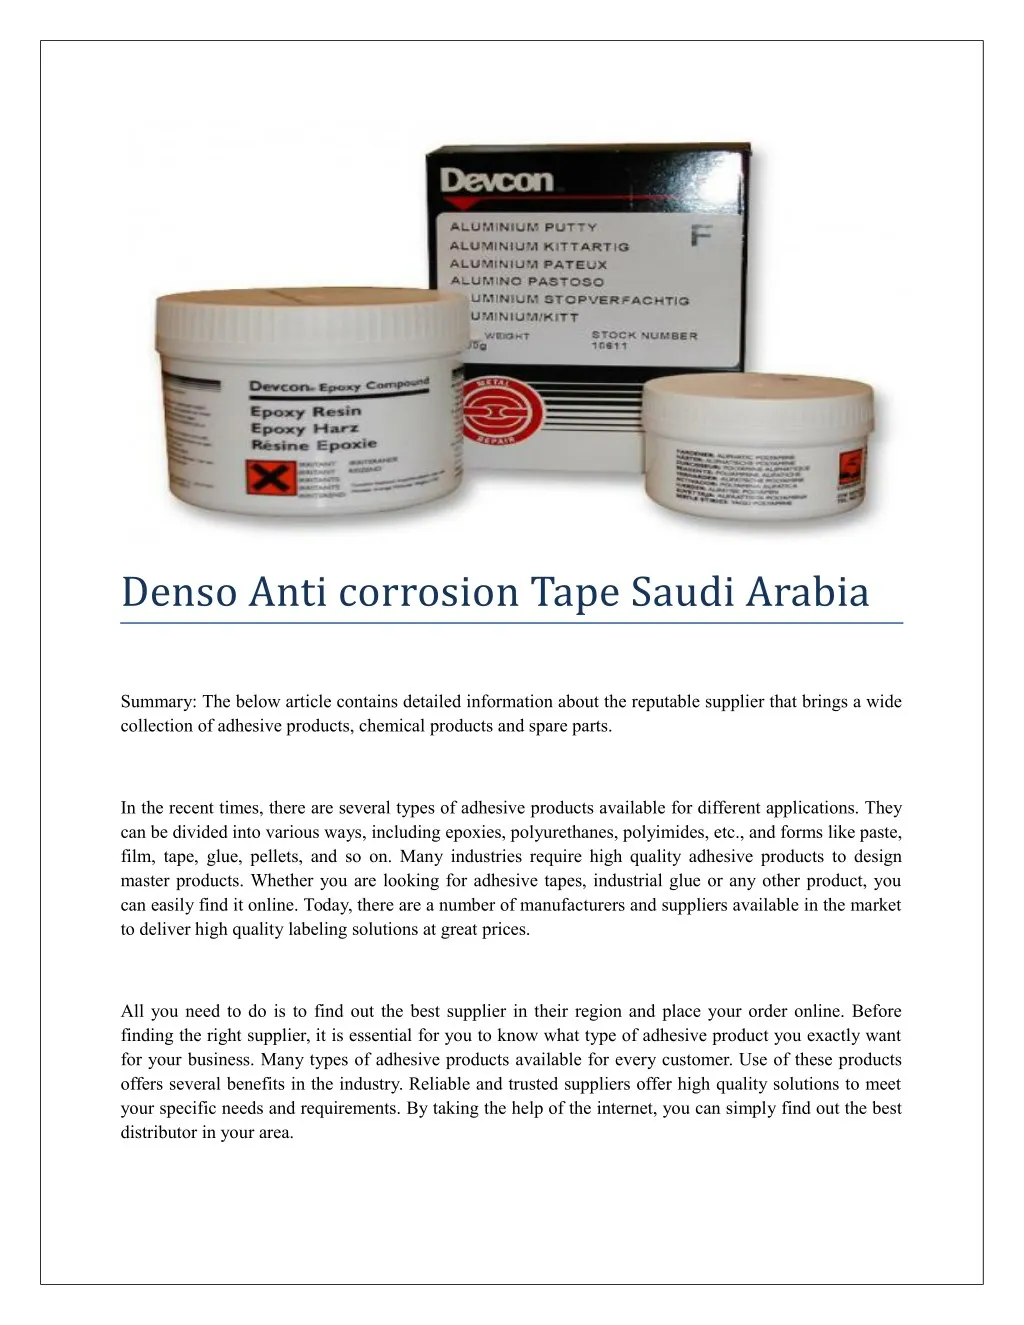 denso anti corrosion tape saudi arabia n.